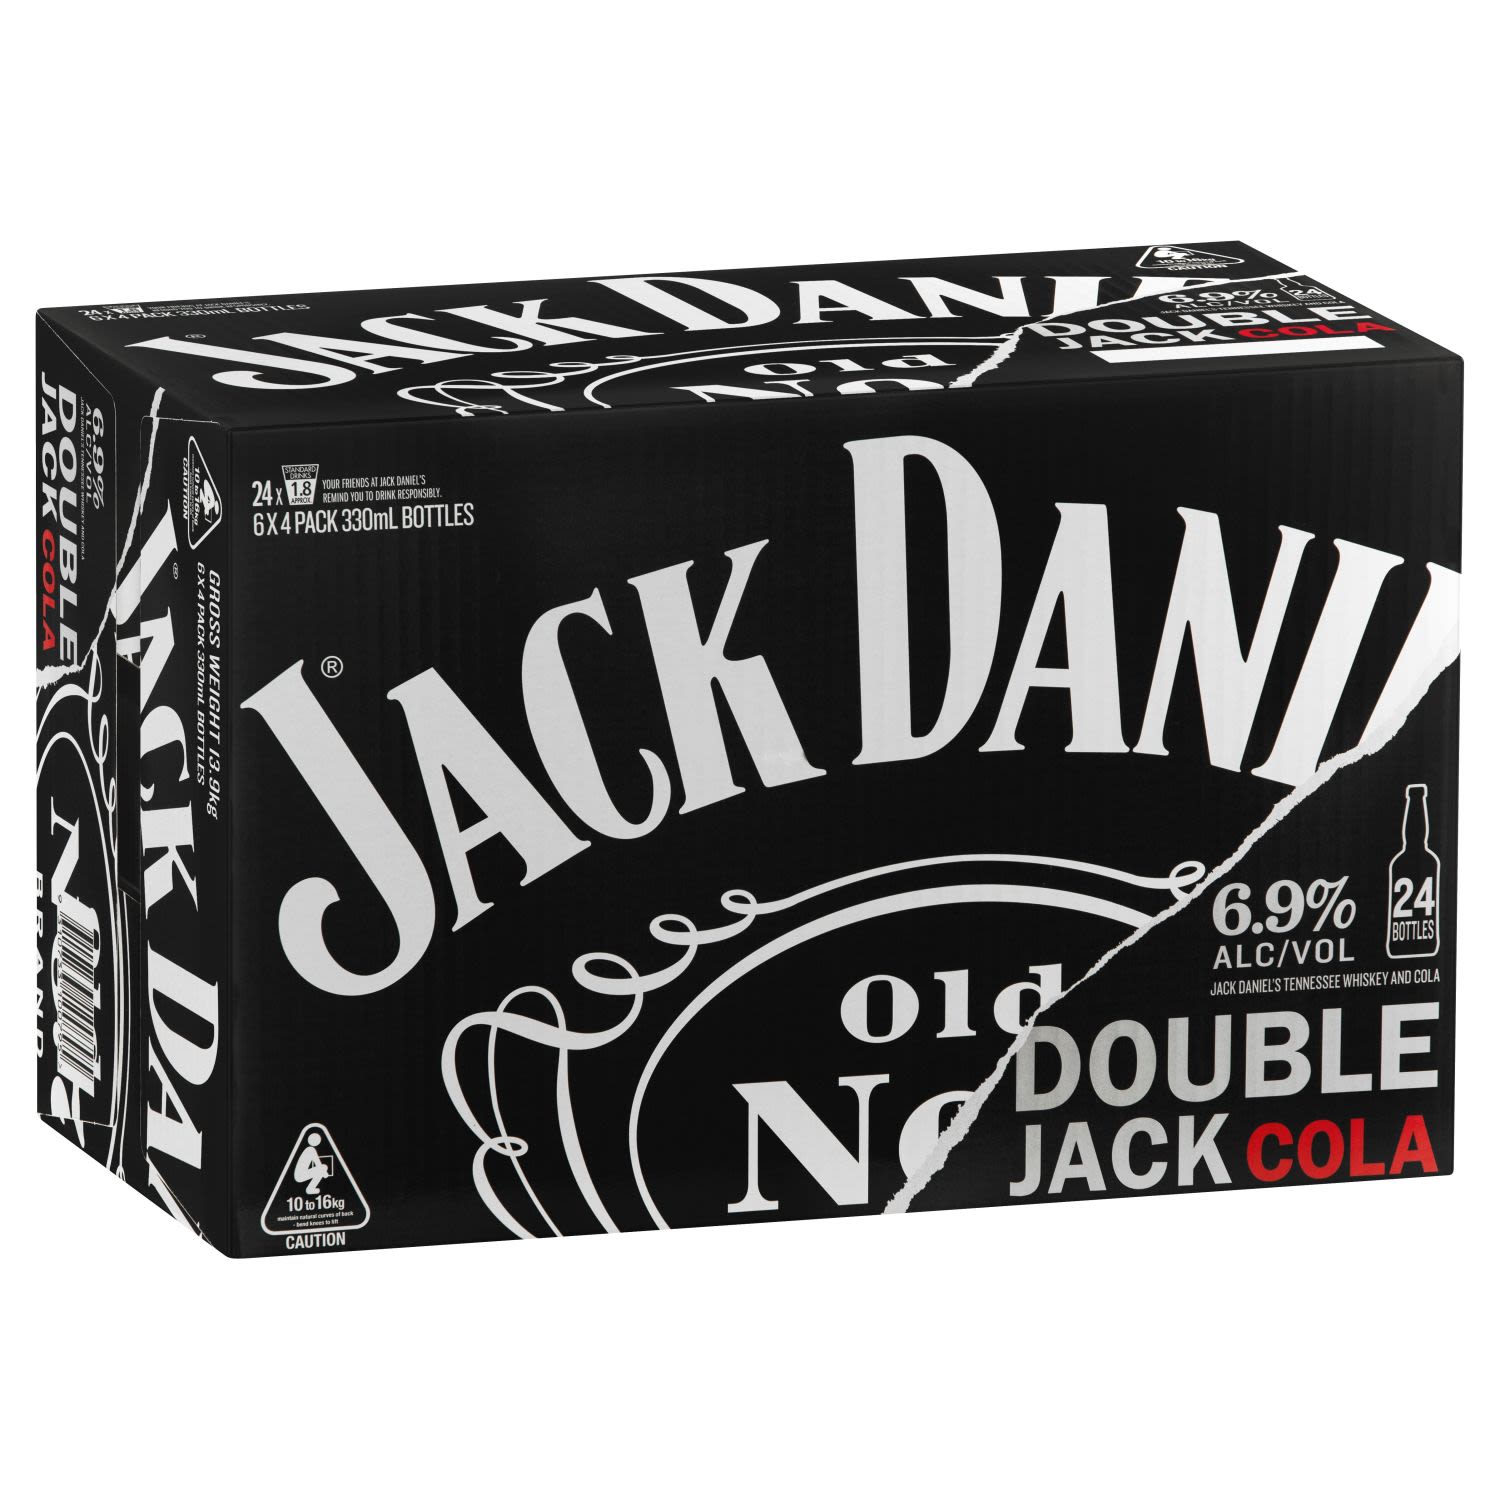 Jack Daniel's Double Jack & Cola Bottle 330mL 24 Pack